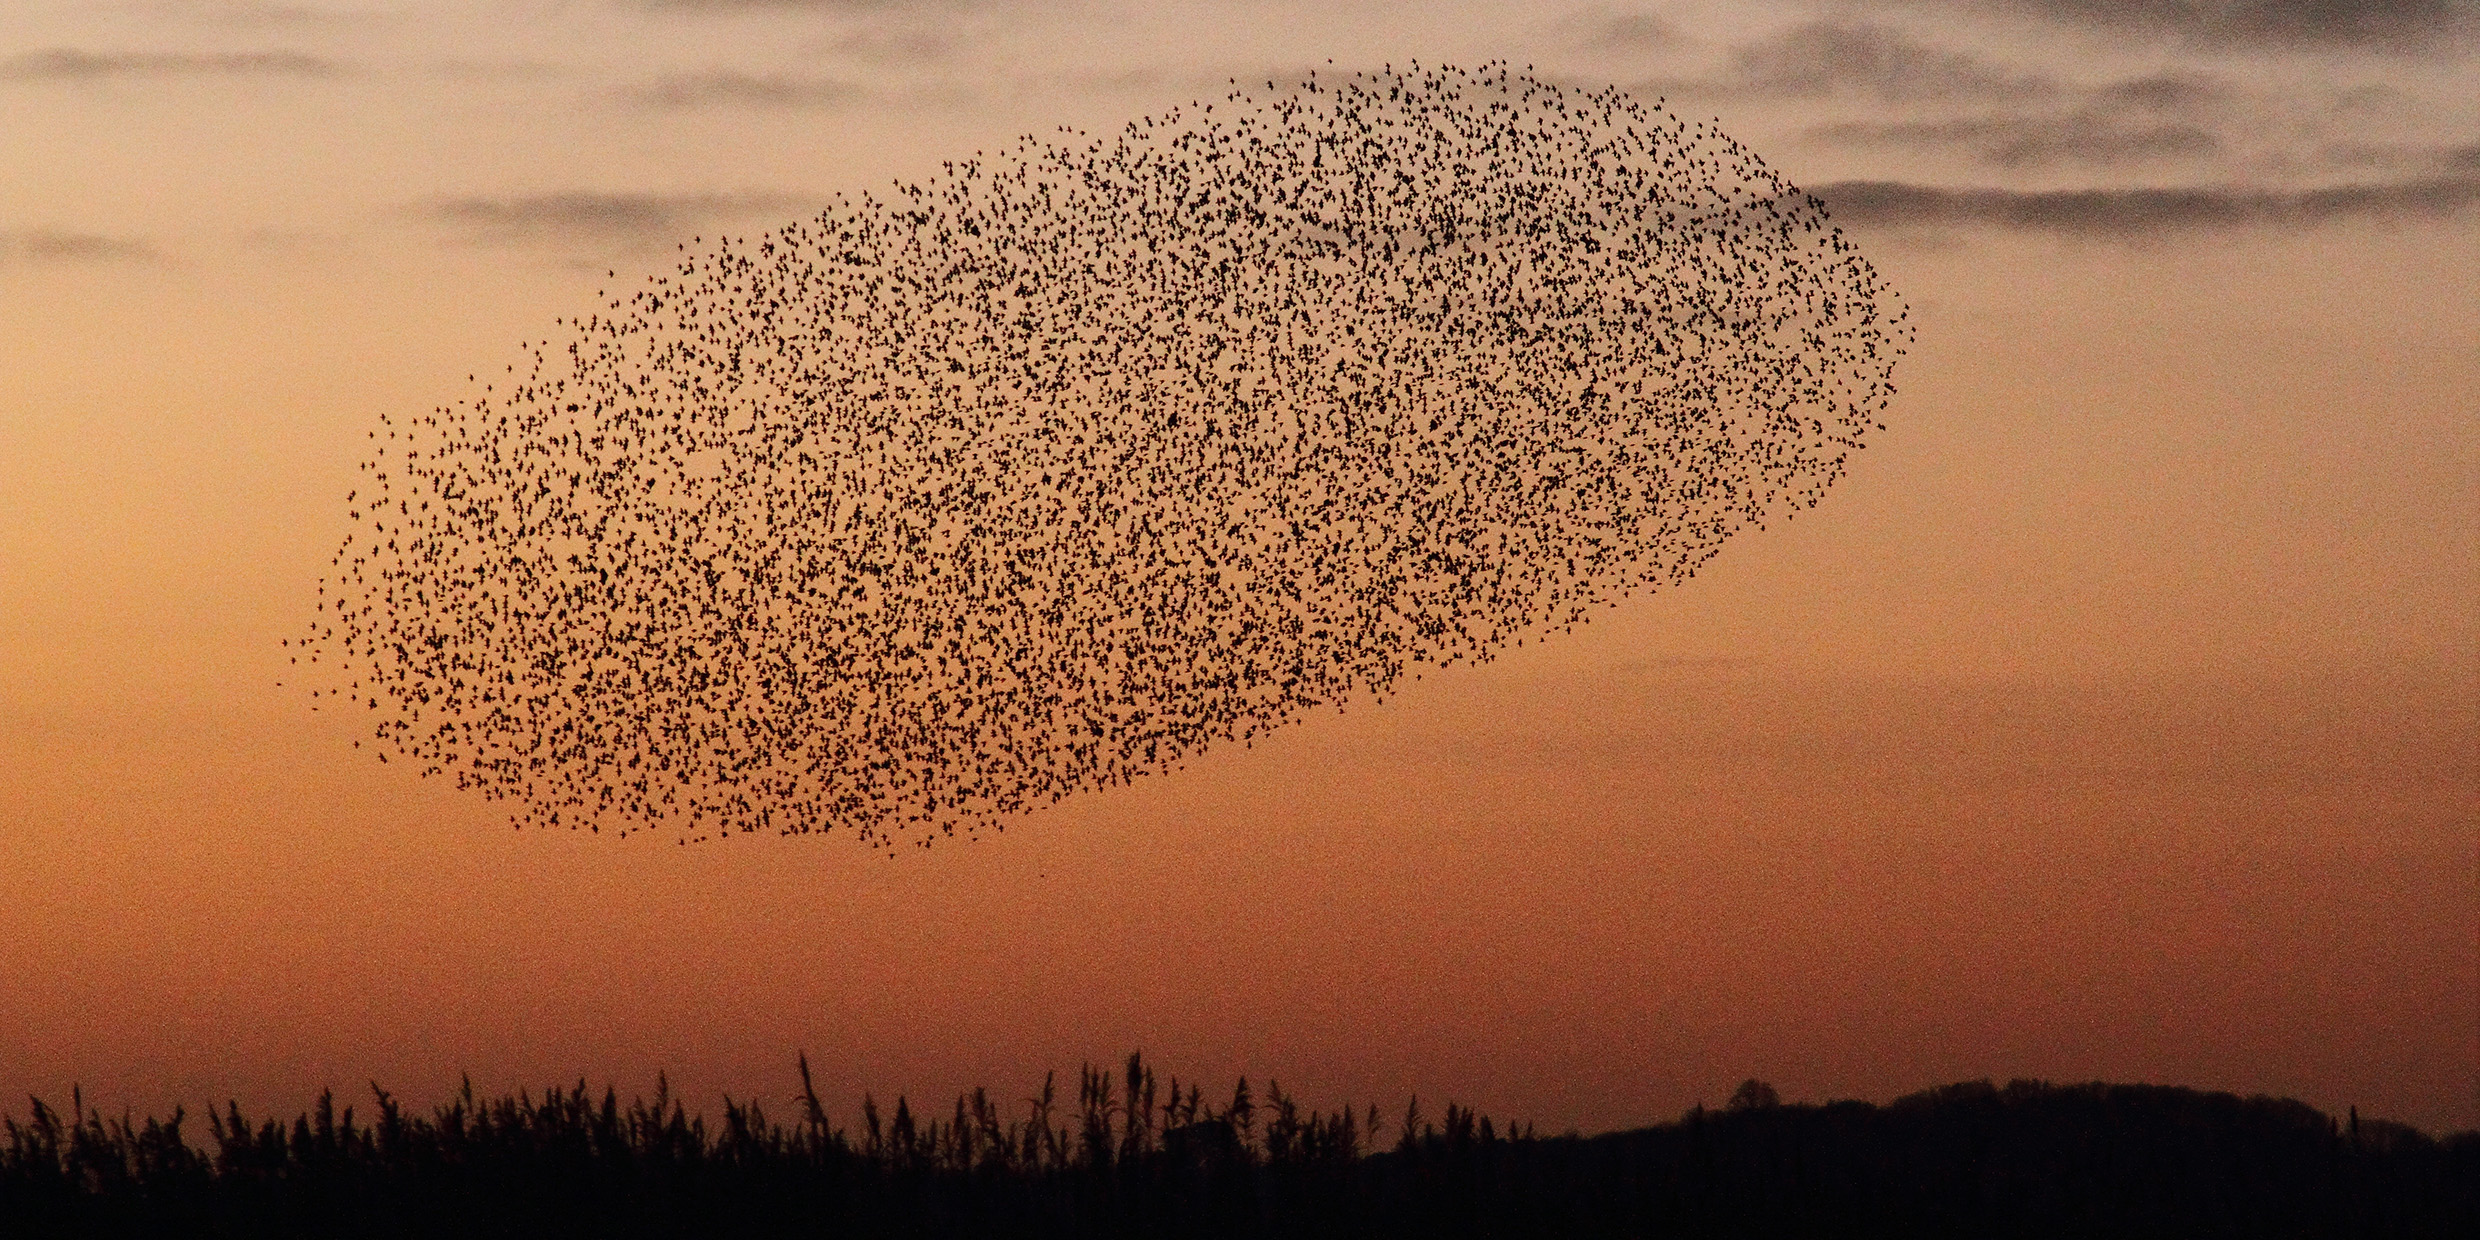 Image of a murmuration of starlings in flight